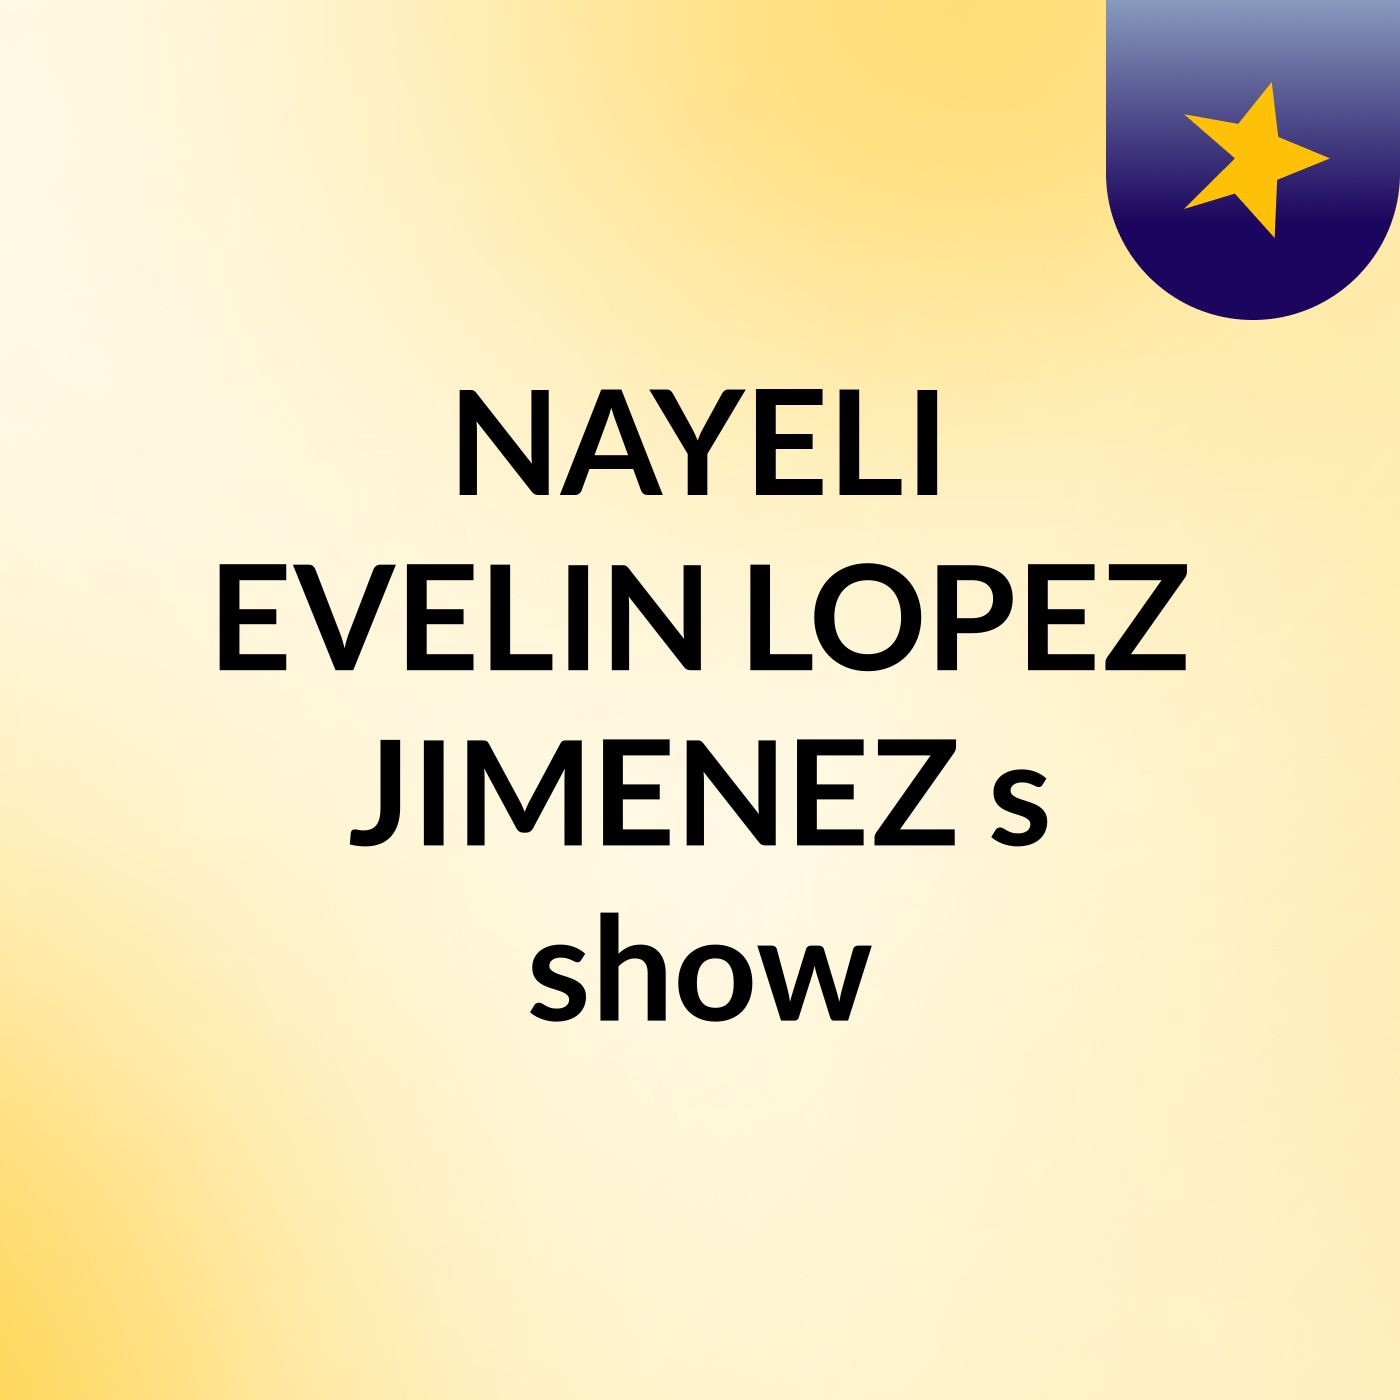 NAYELI EVELIN LOPEZ JIMENEZ's show